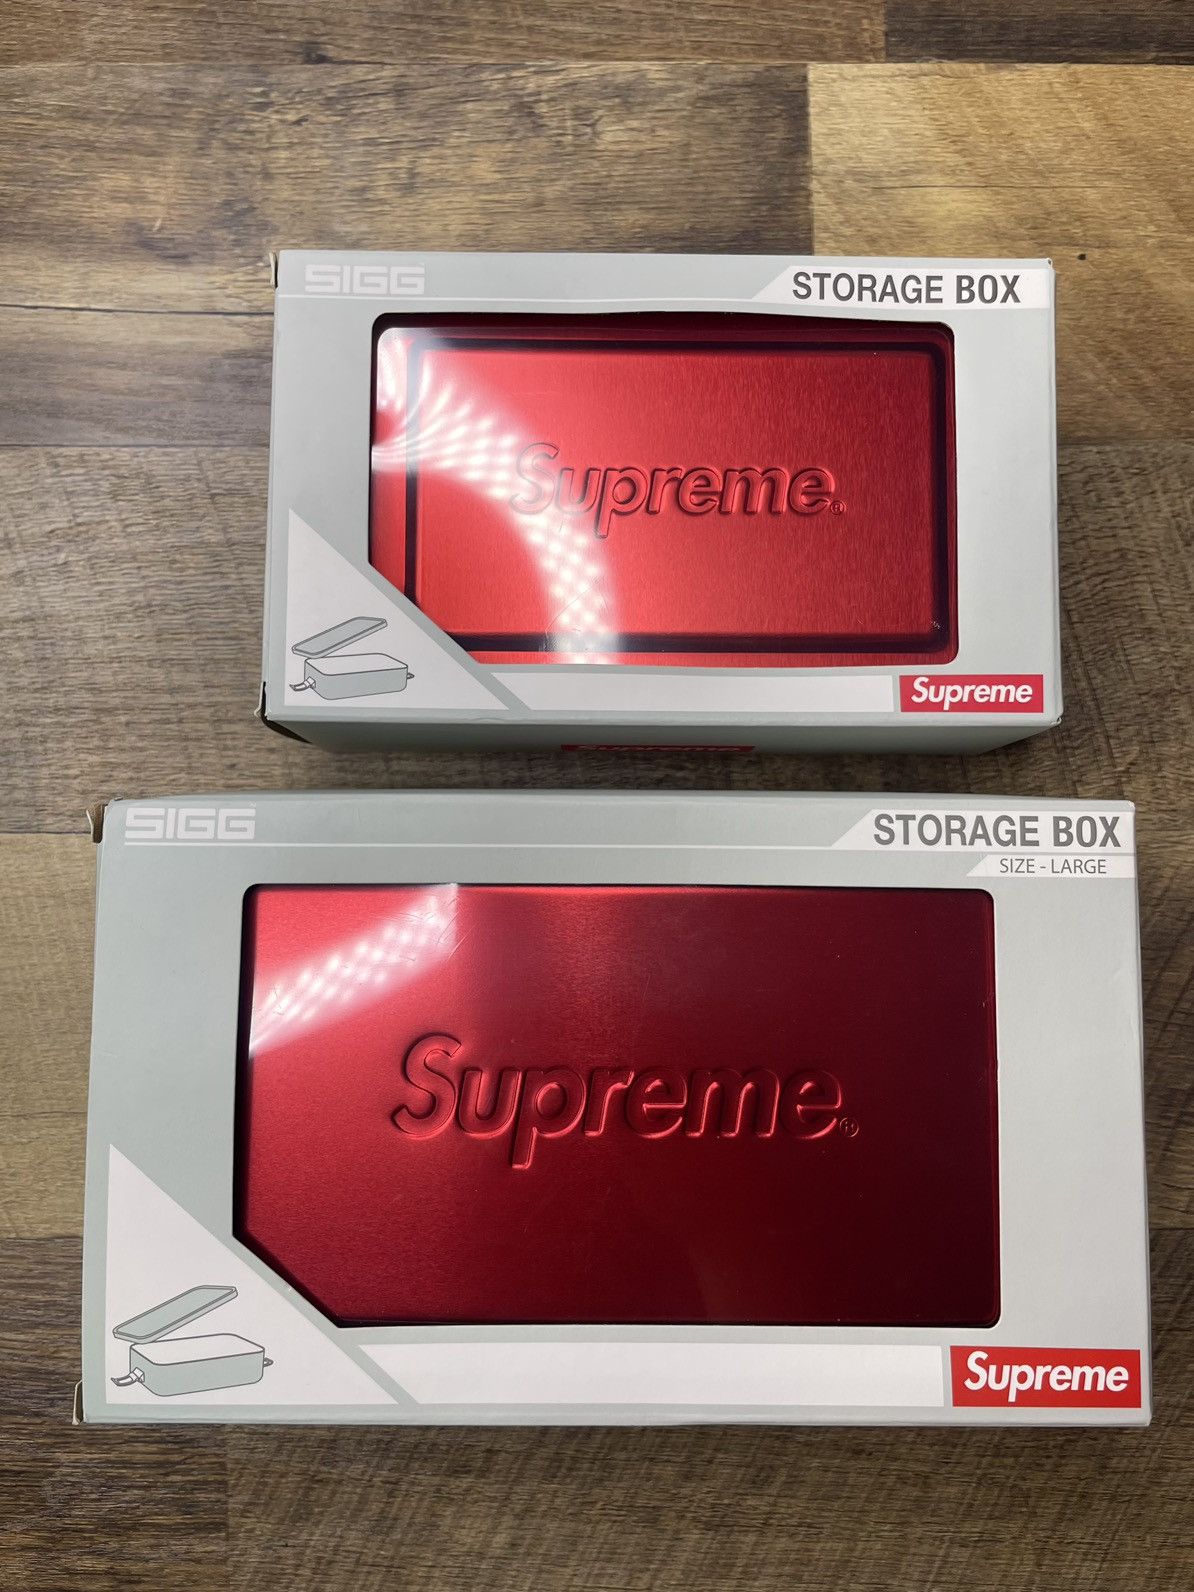 Supreme Supreme SIGG Metal Box Plus pack both LARGE and SMALL